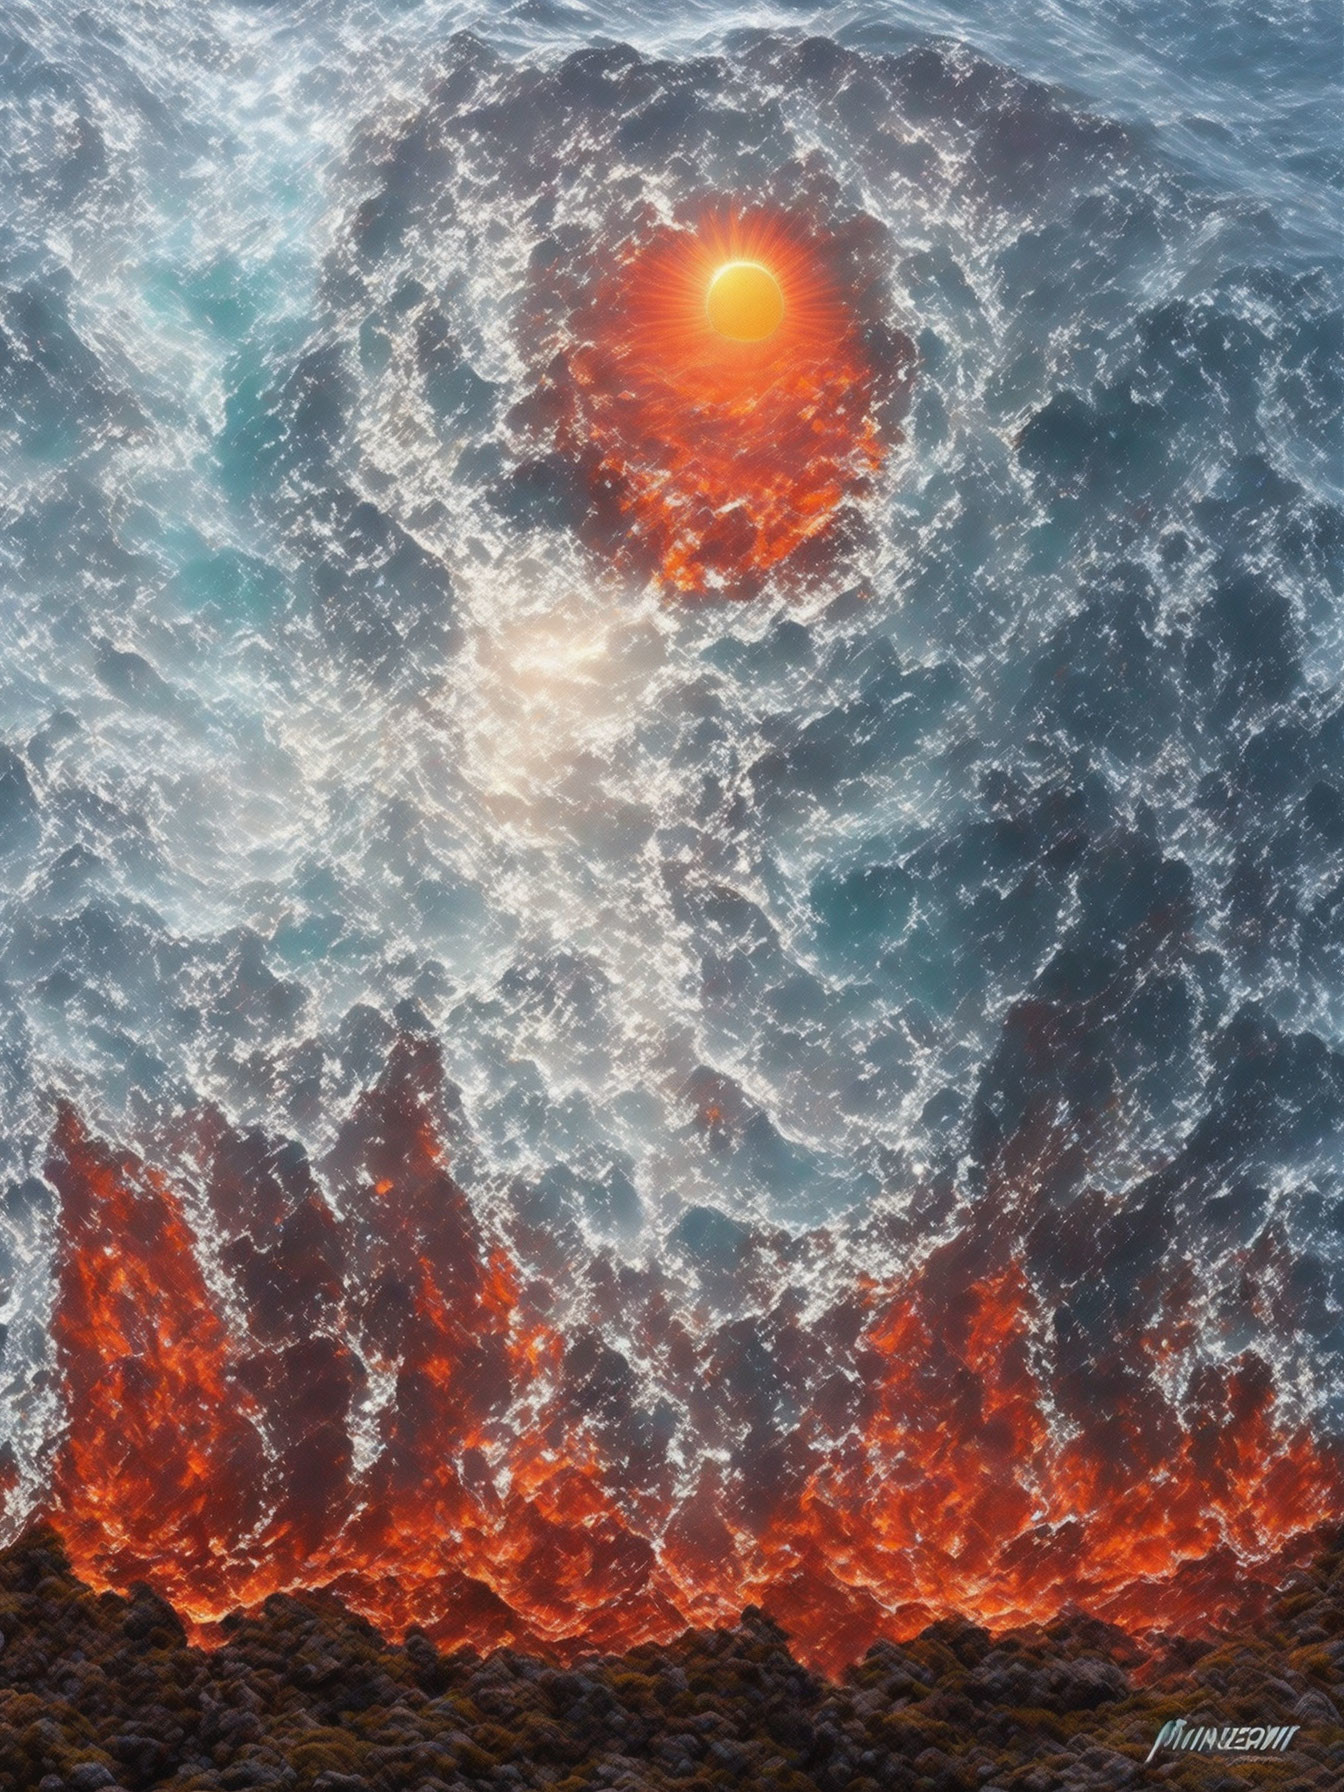 Surreal artwork of sun, water, fire vortex, rocky terrain